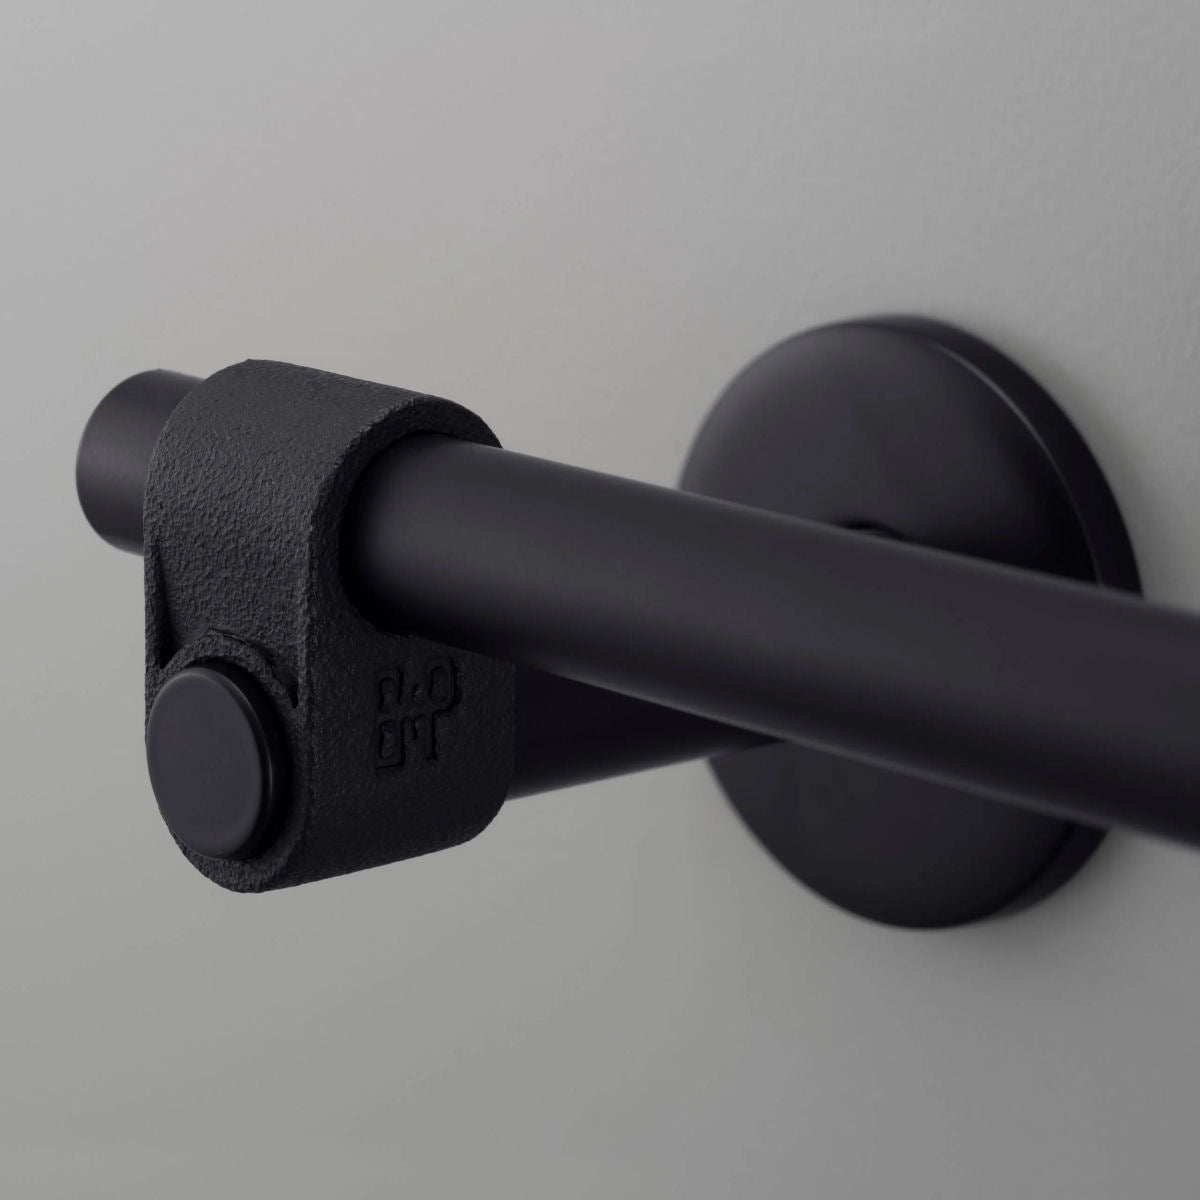 Design Toilet Roll Paper Holder / Welders Black - |VESIMI Design| Luxury and Rustic bathrooms online